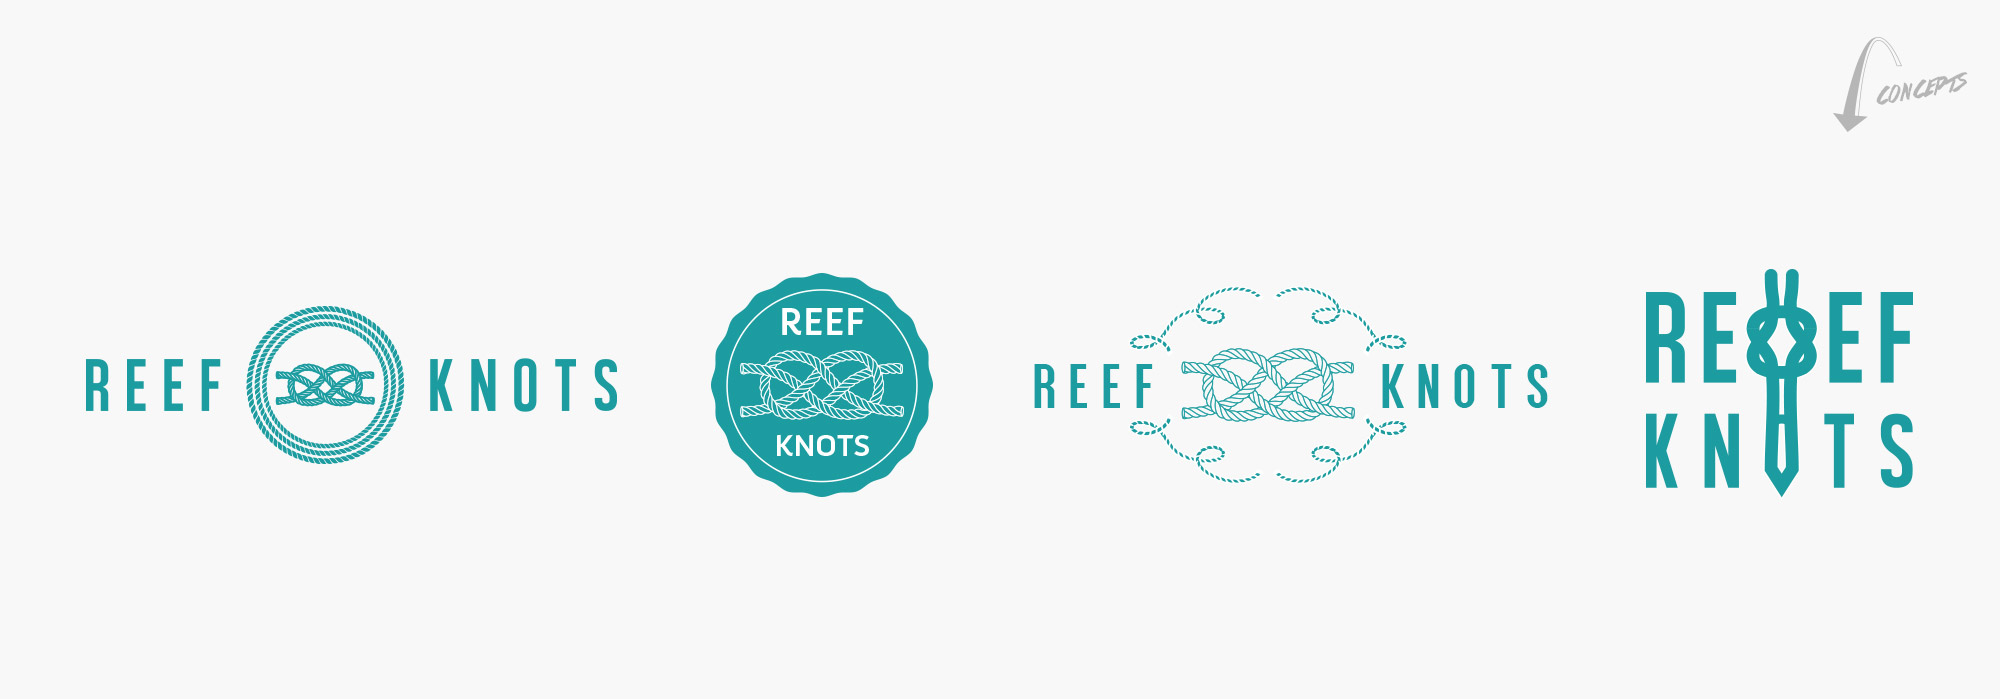 reef knots branding